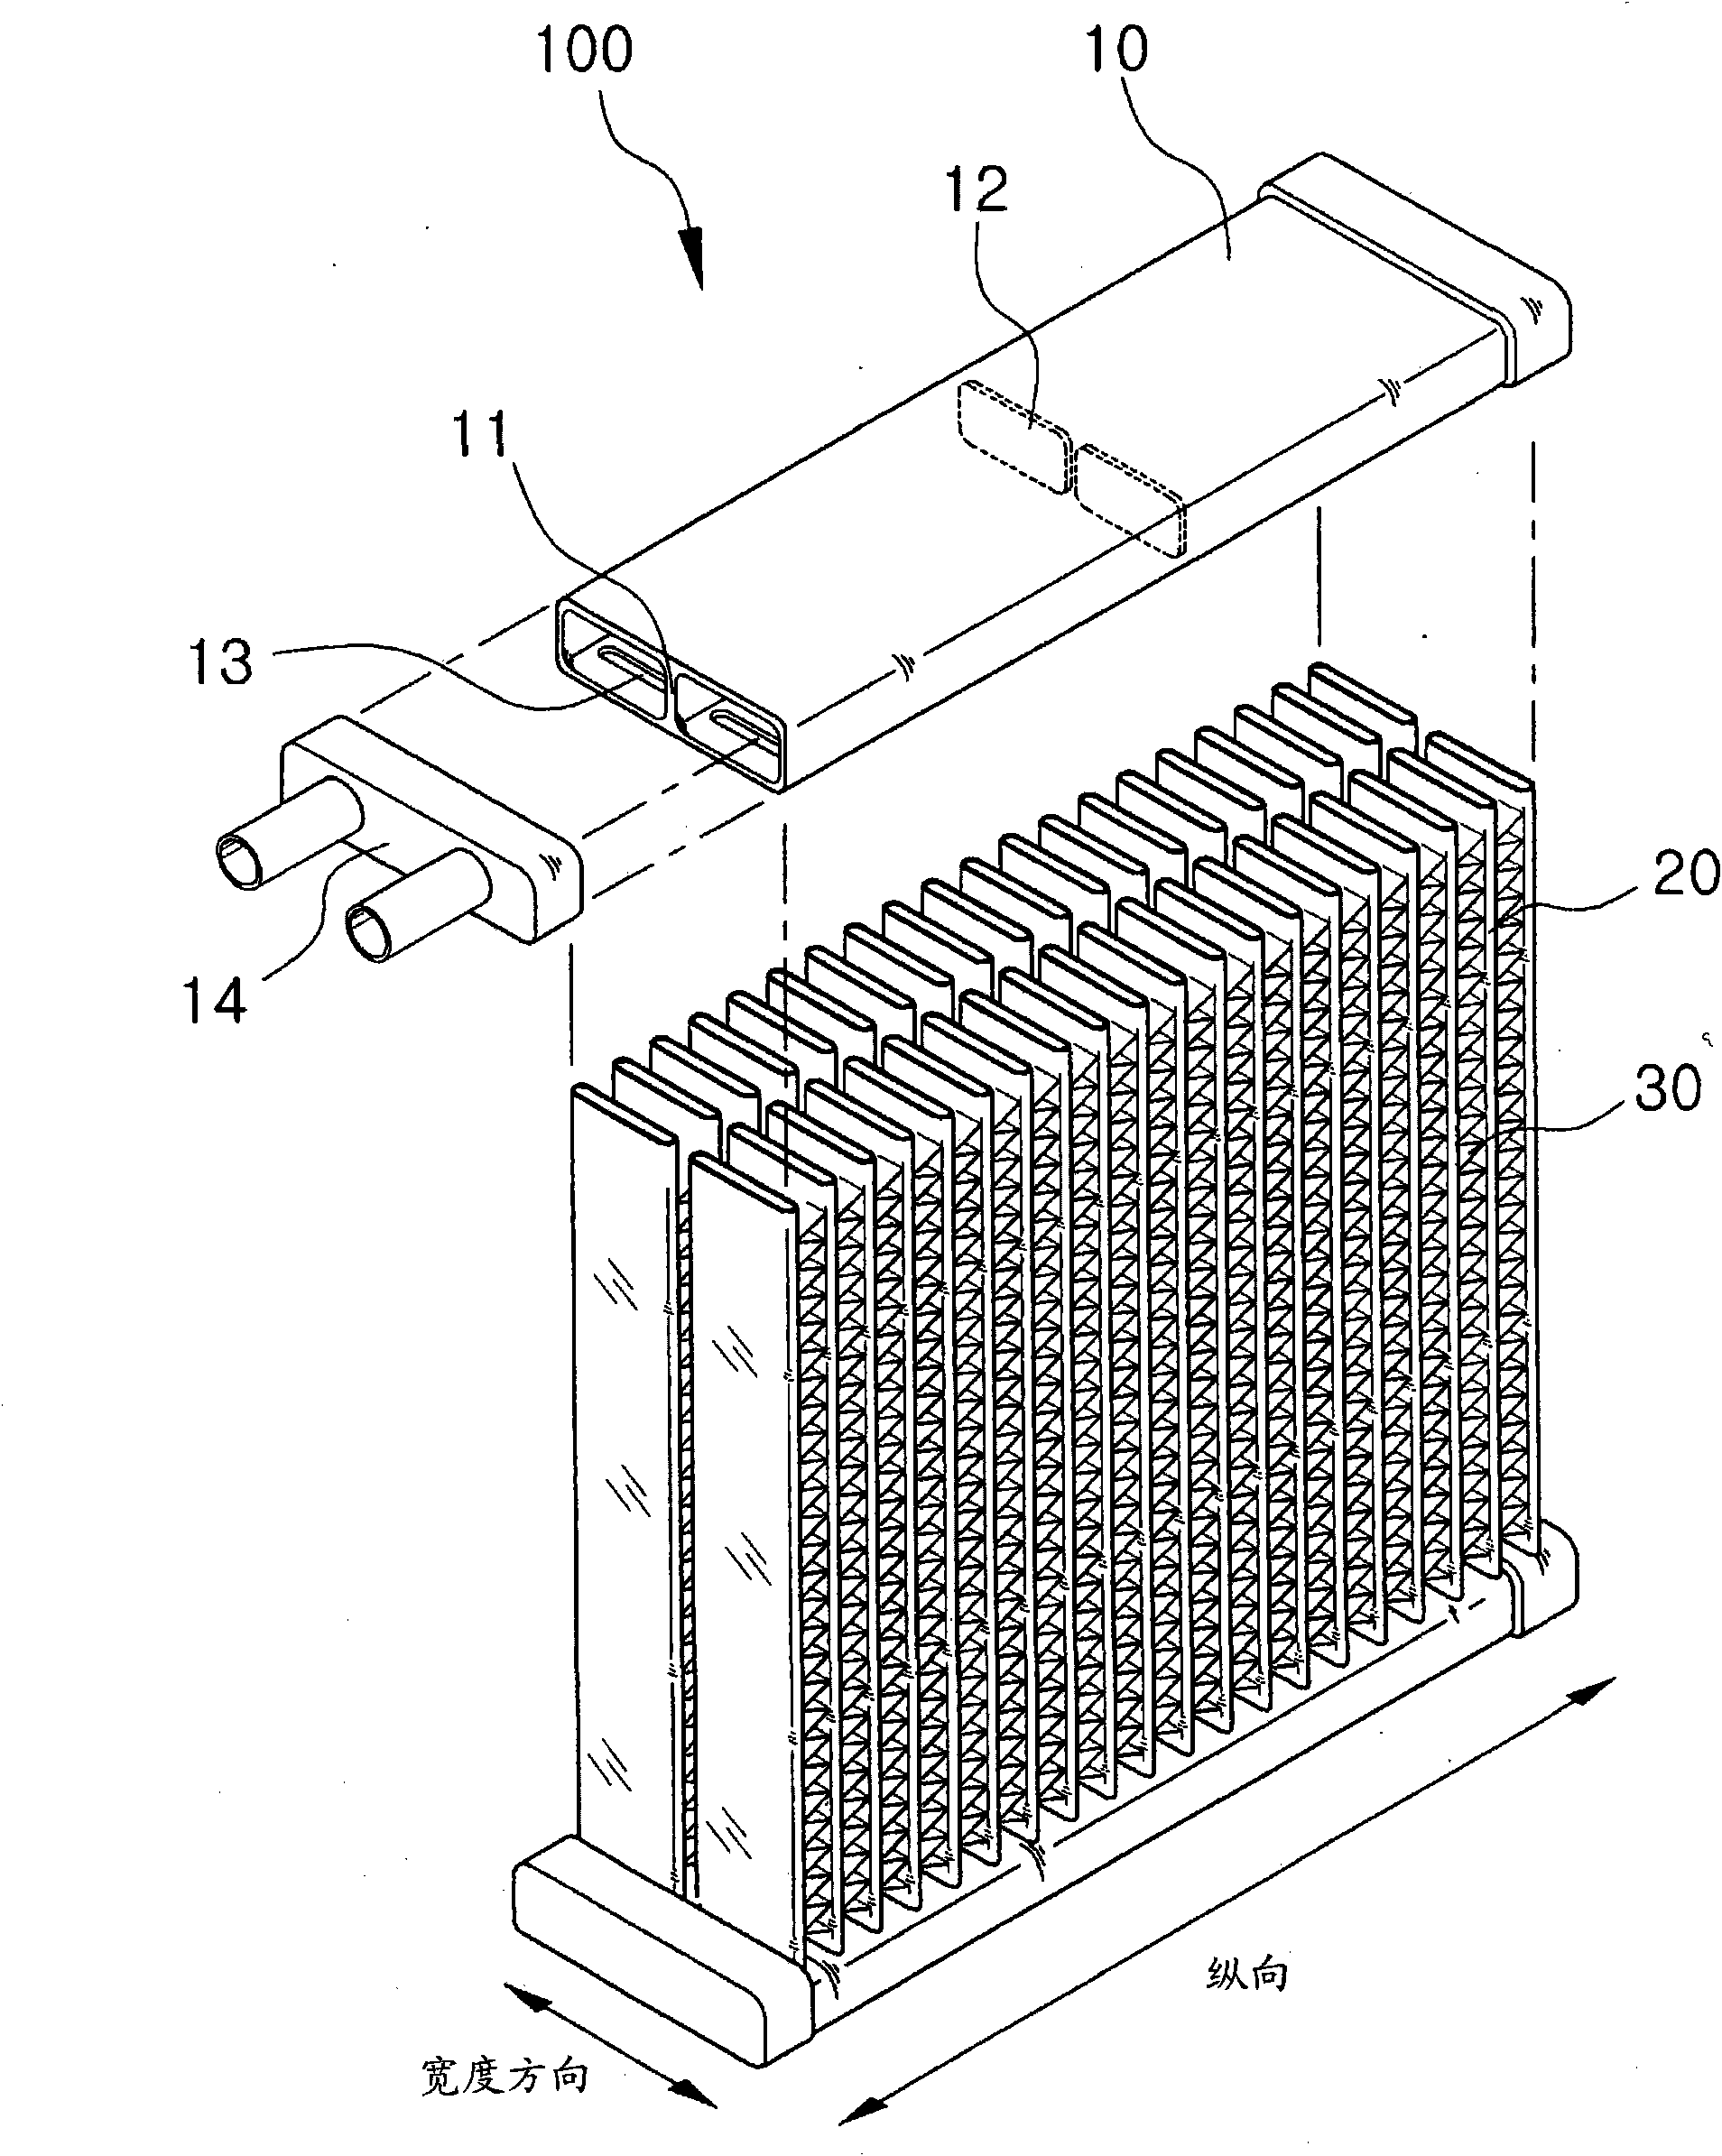 A heat exchanger